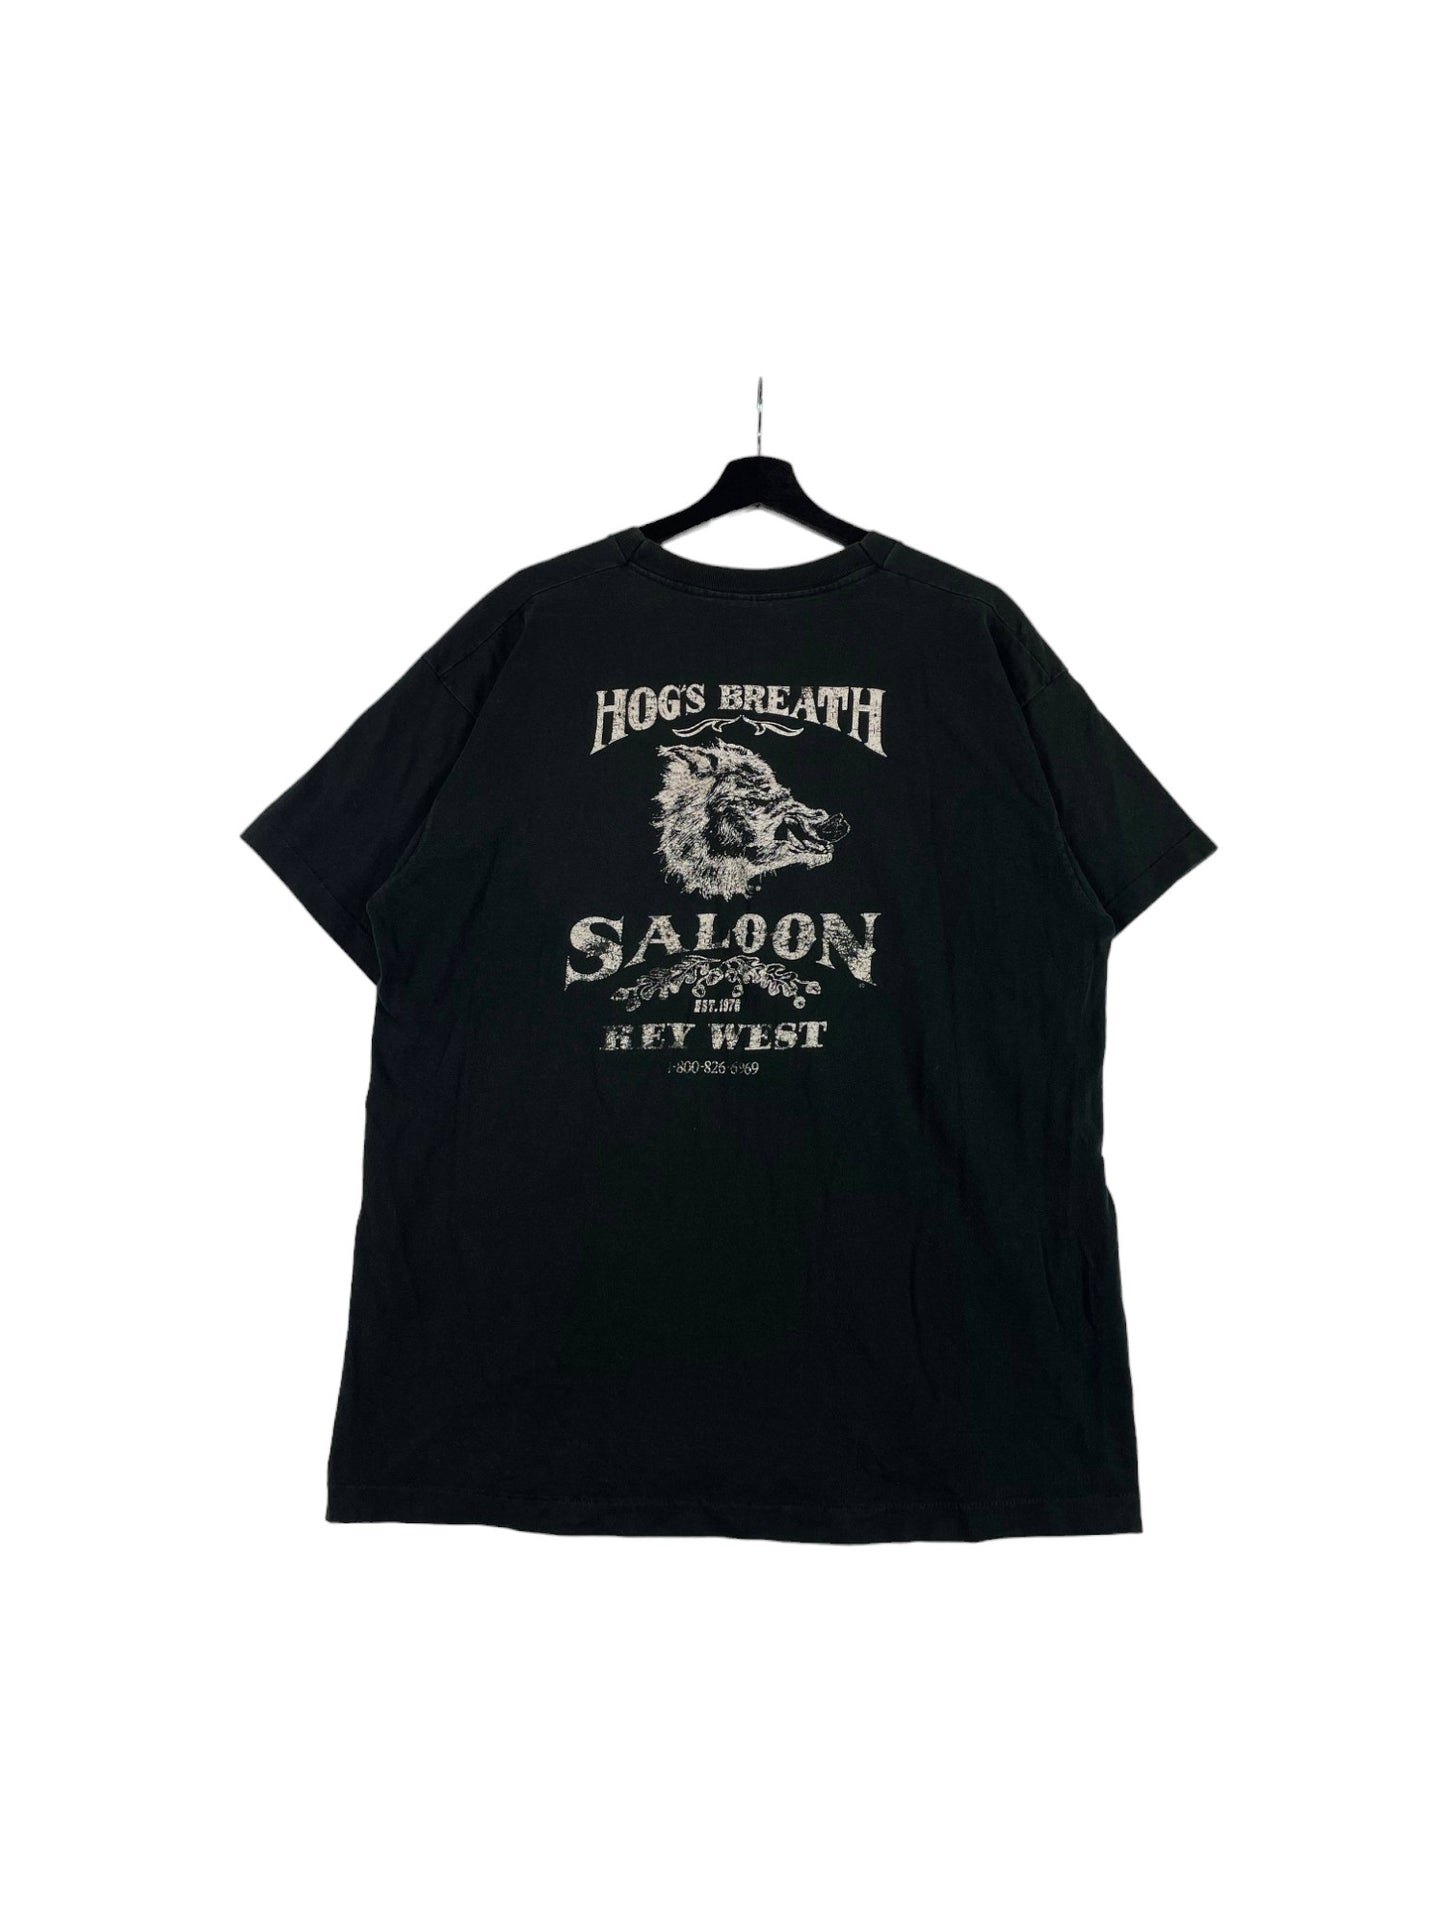 Hogs Breath Saloon T-Shirt